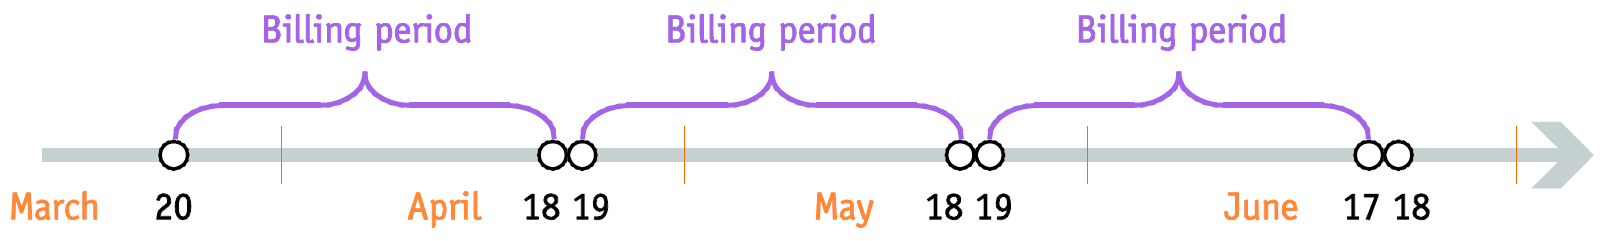 30 days billing period